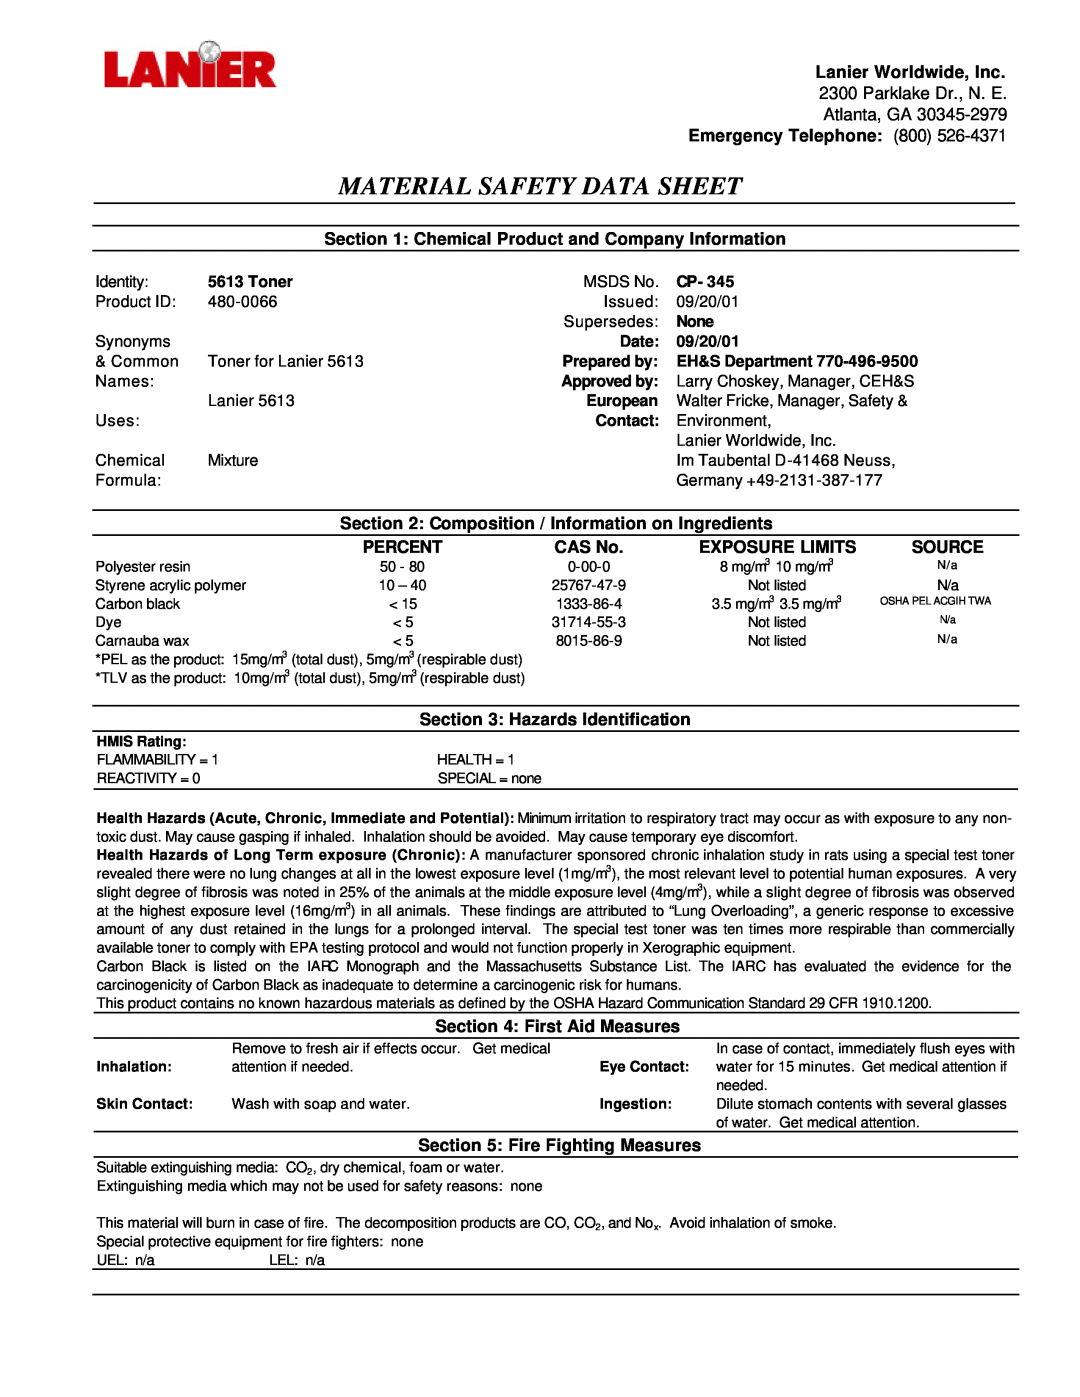 Lanier 480-0066 manual Material Safety Data Sheet 